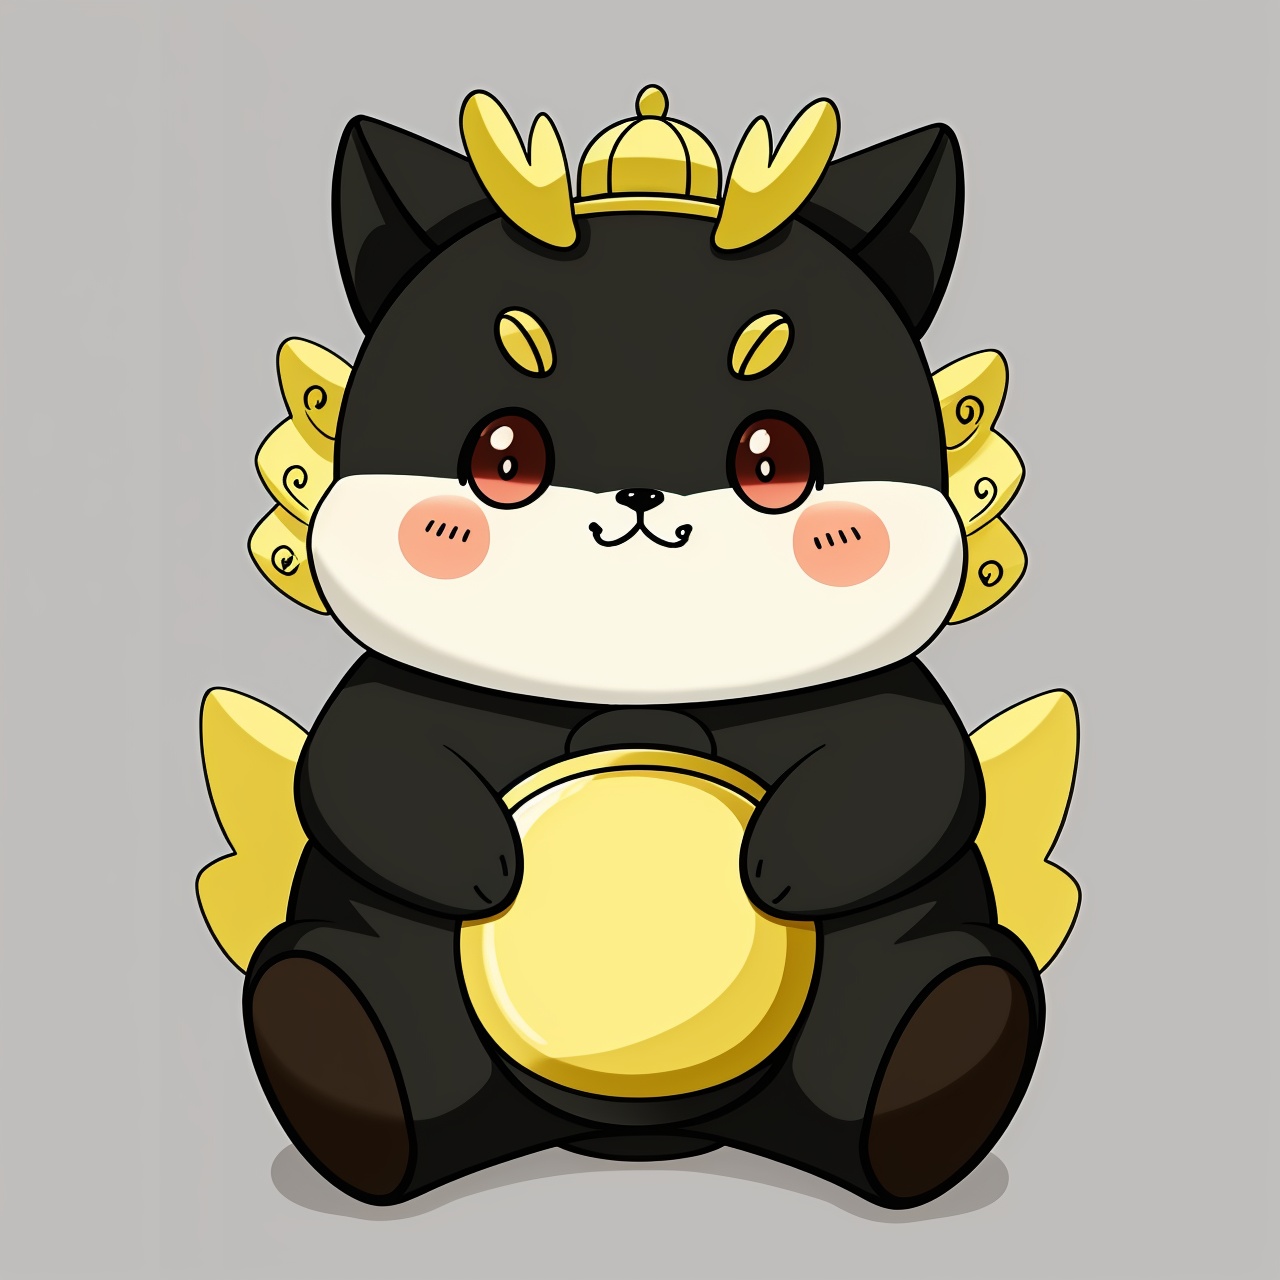 Black Pokemon, cute, chubby, gold ingot, 32k, high definition